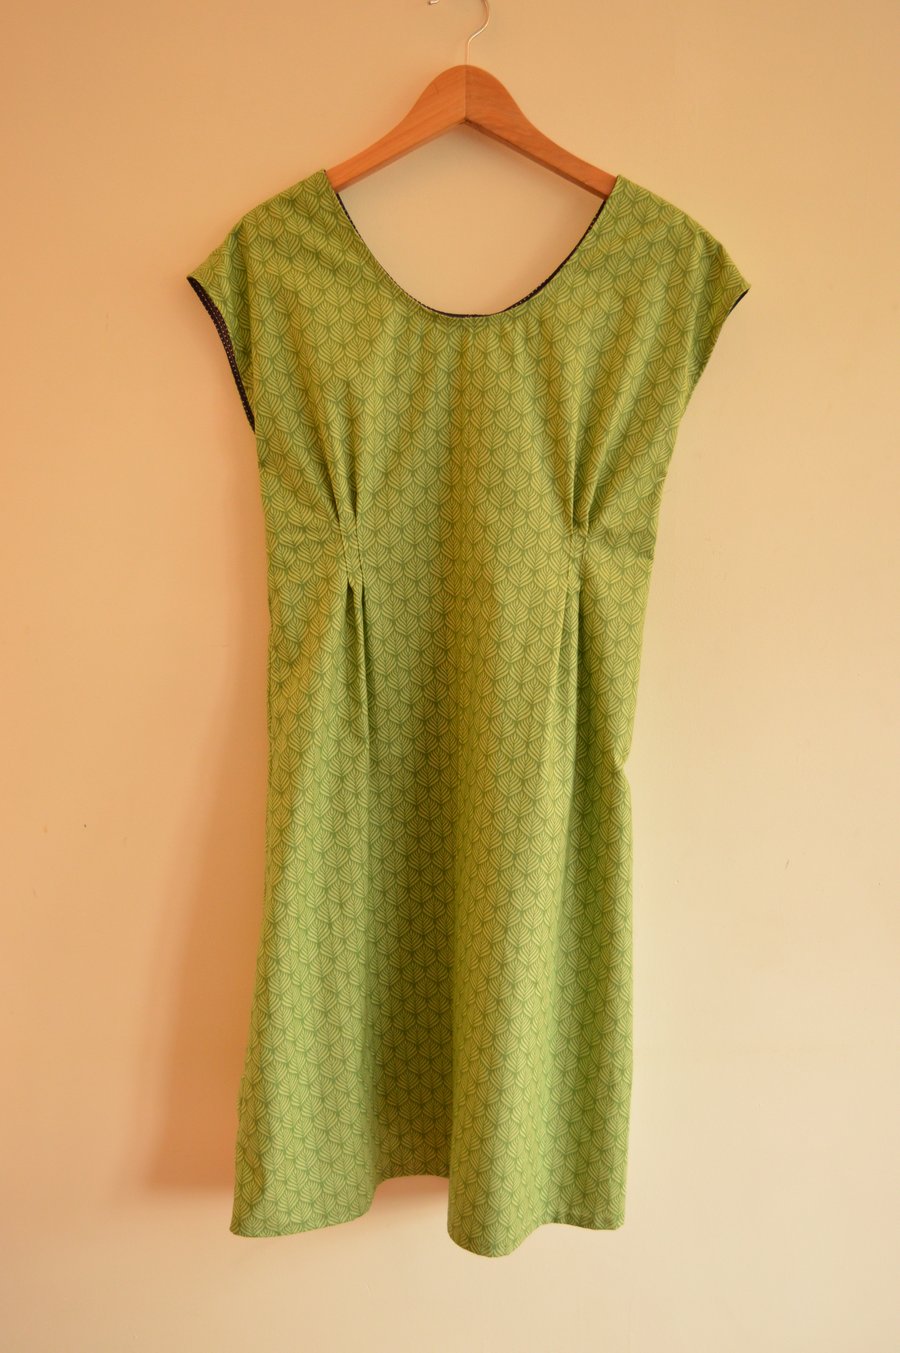 Handmade green tea dress leaf print in cotton.